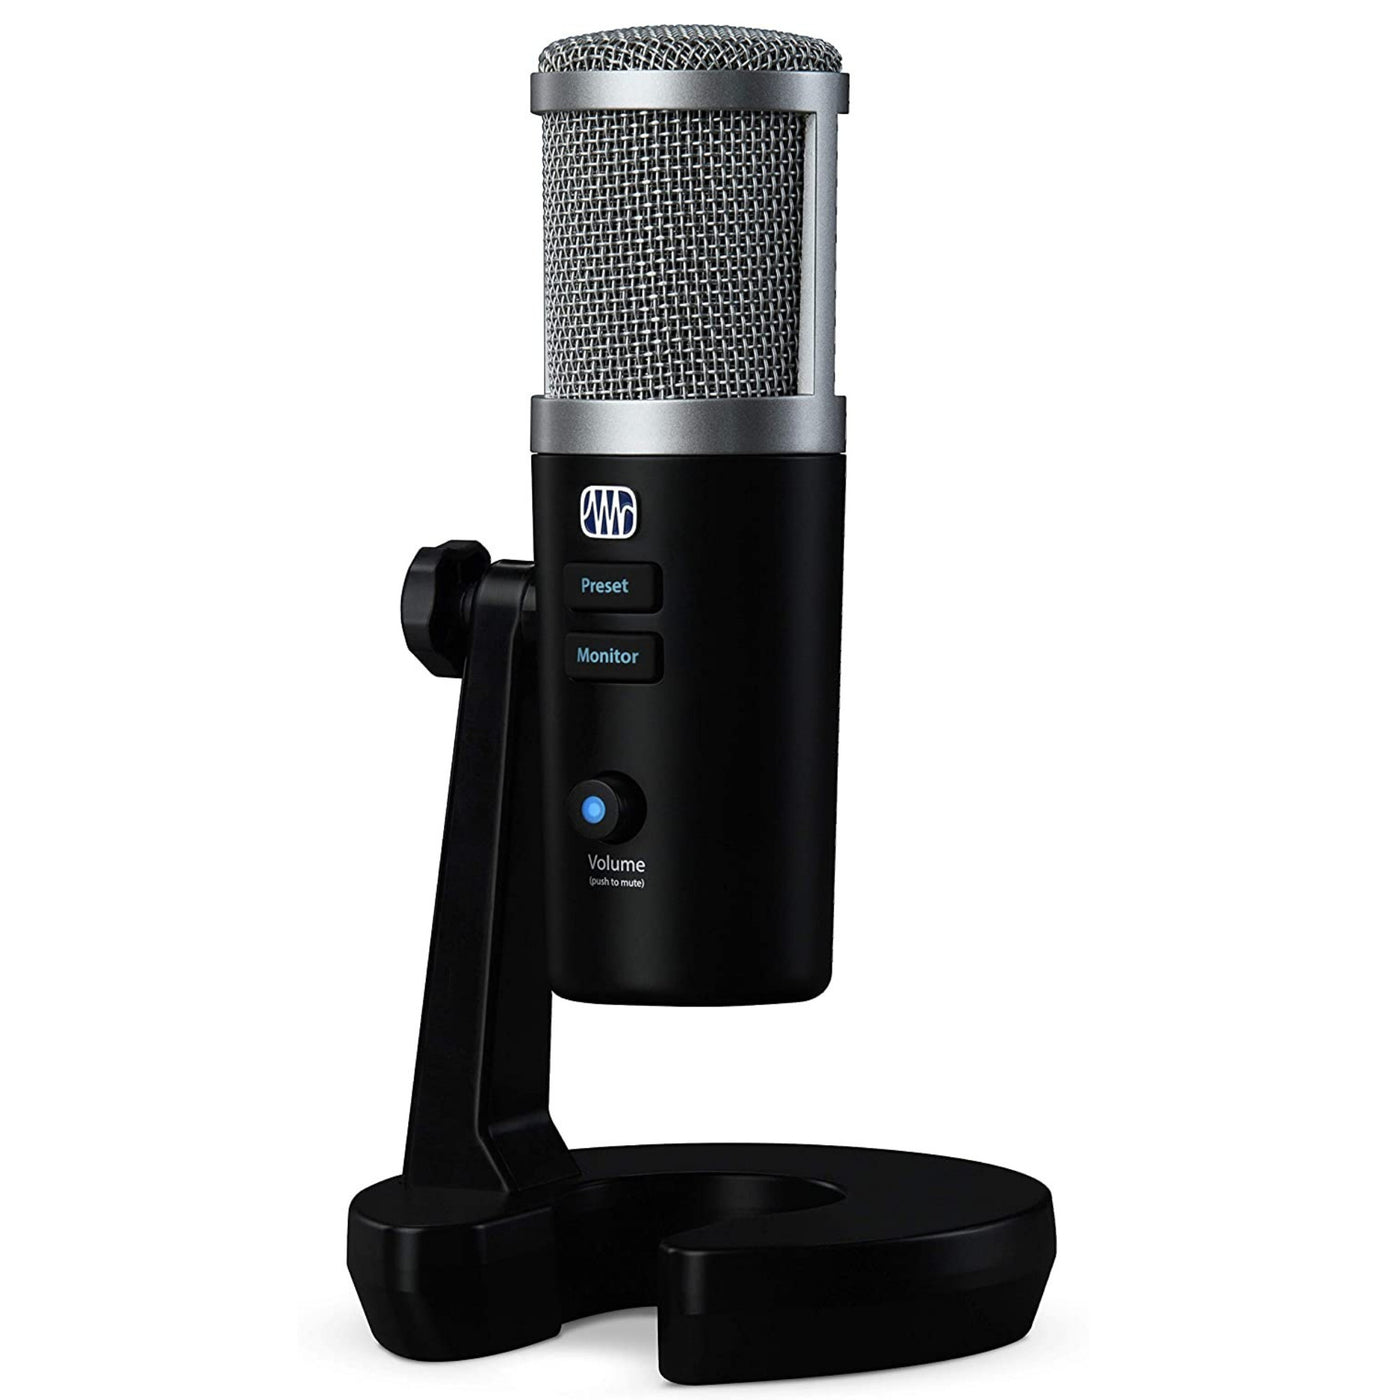 PreSonus Revelator USB Condender Microphone